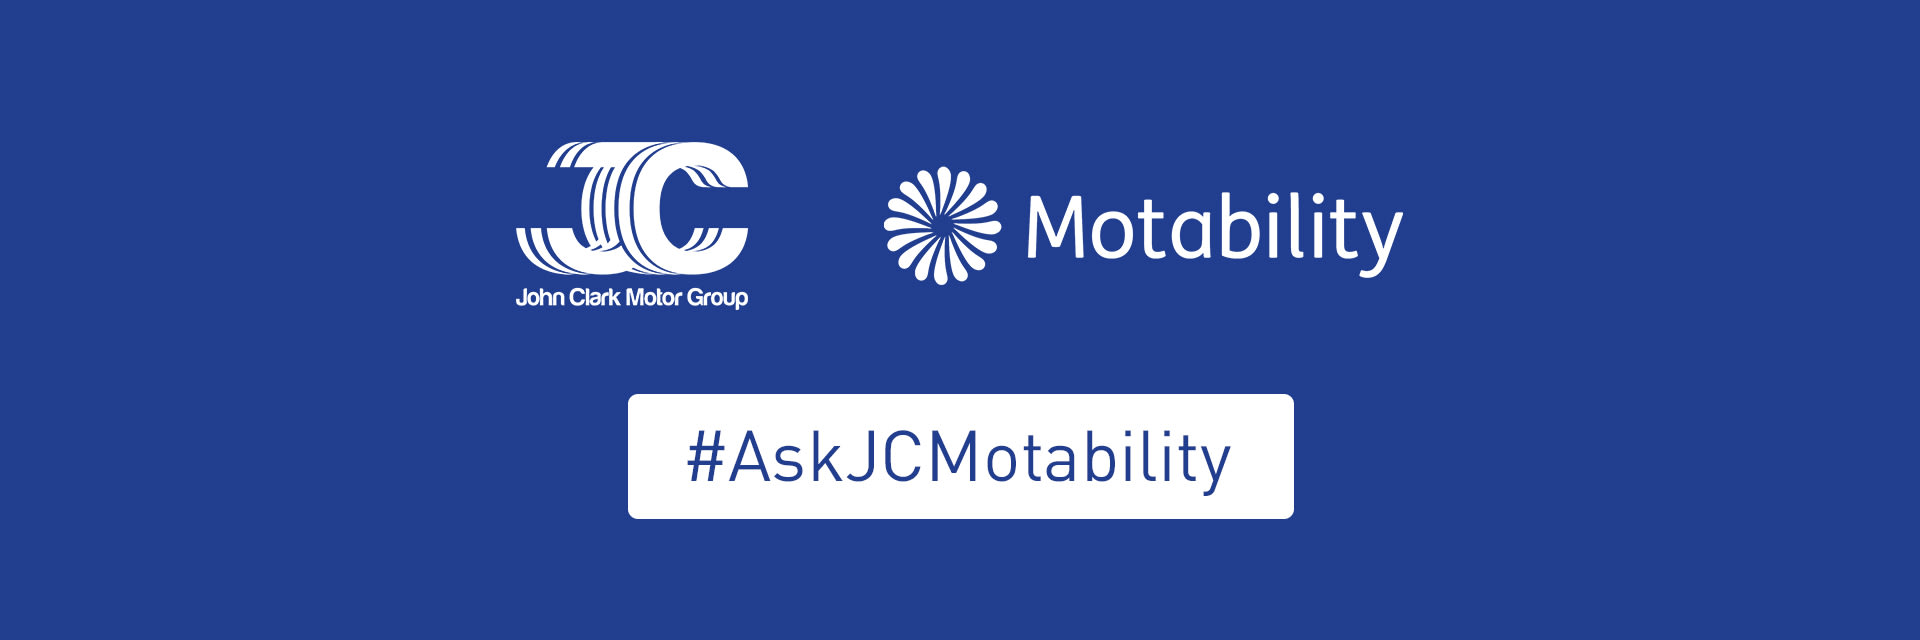 #AskJCMotability Motab scheme questions